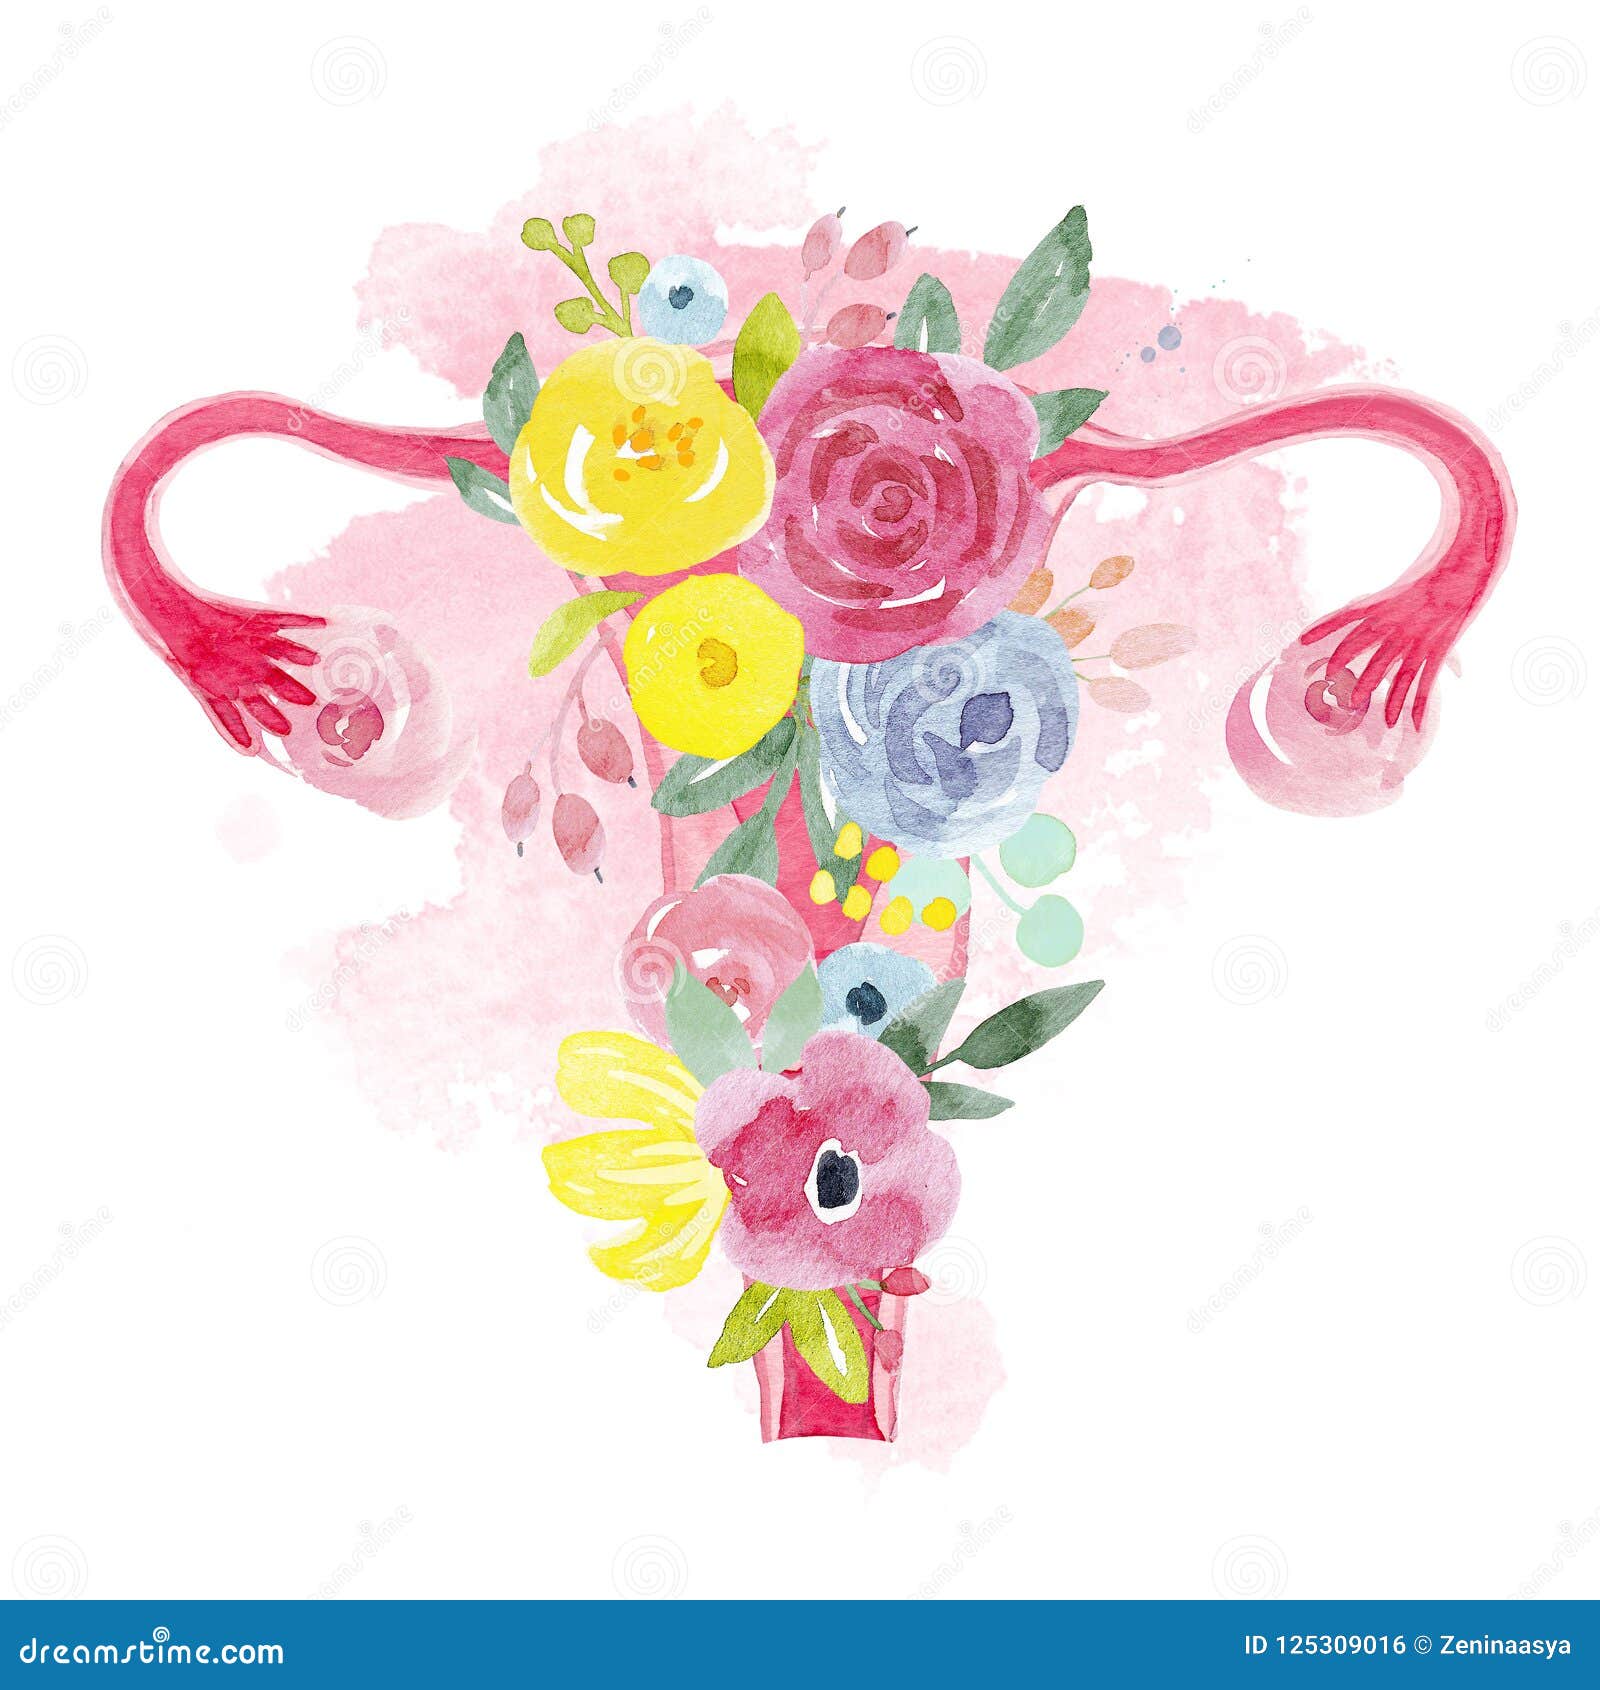 woman uterus with flowers 